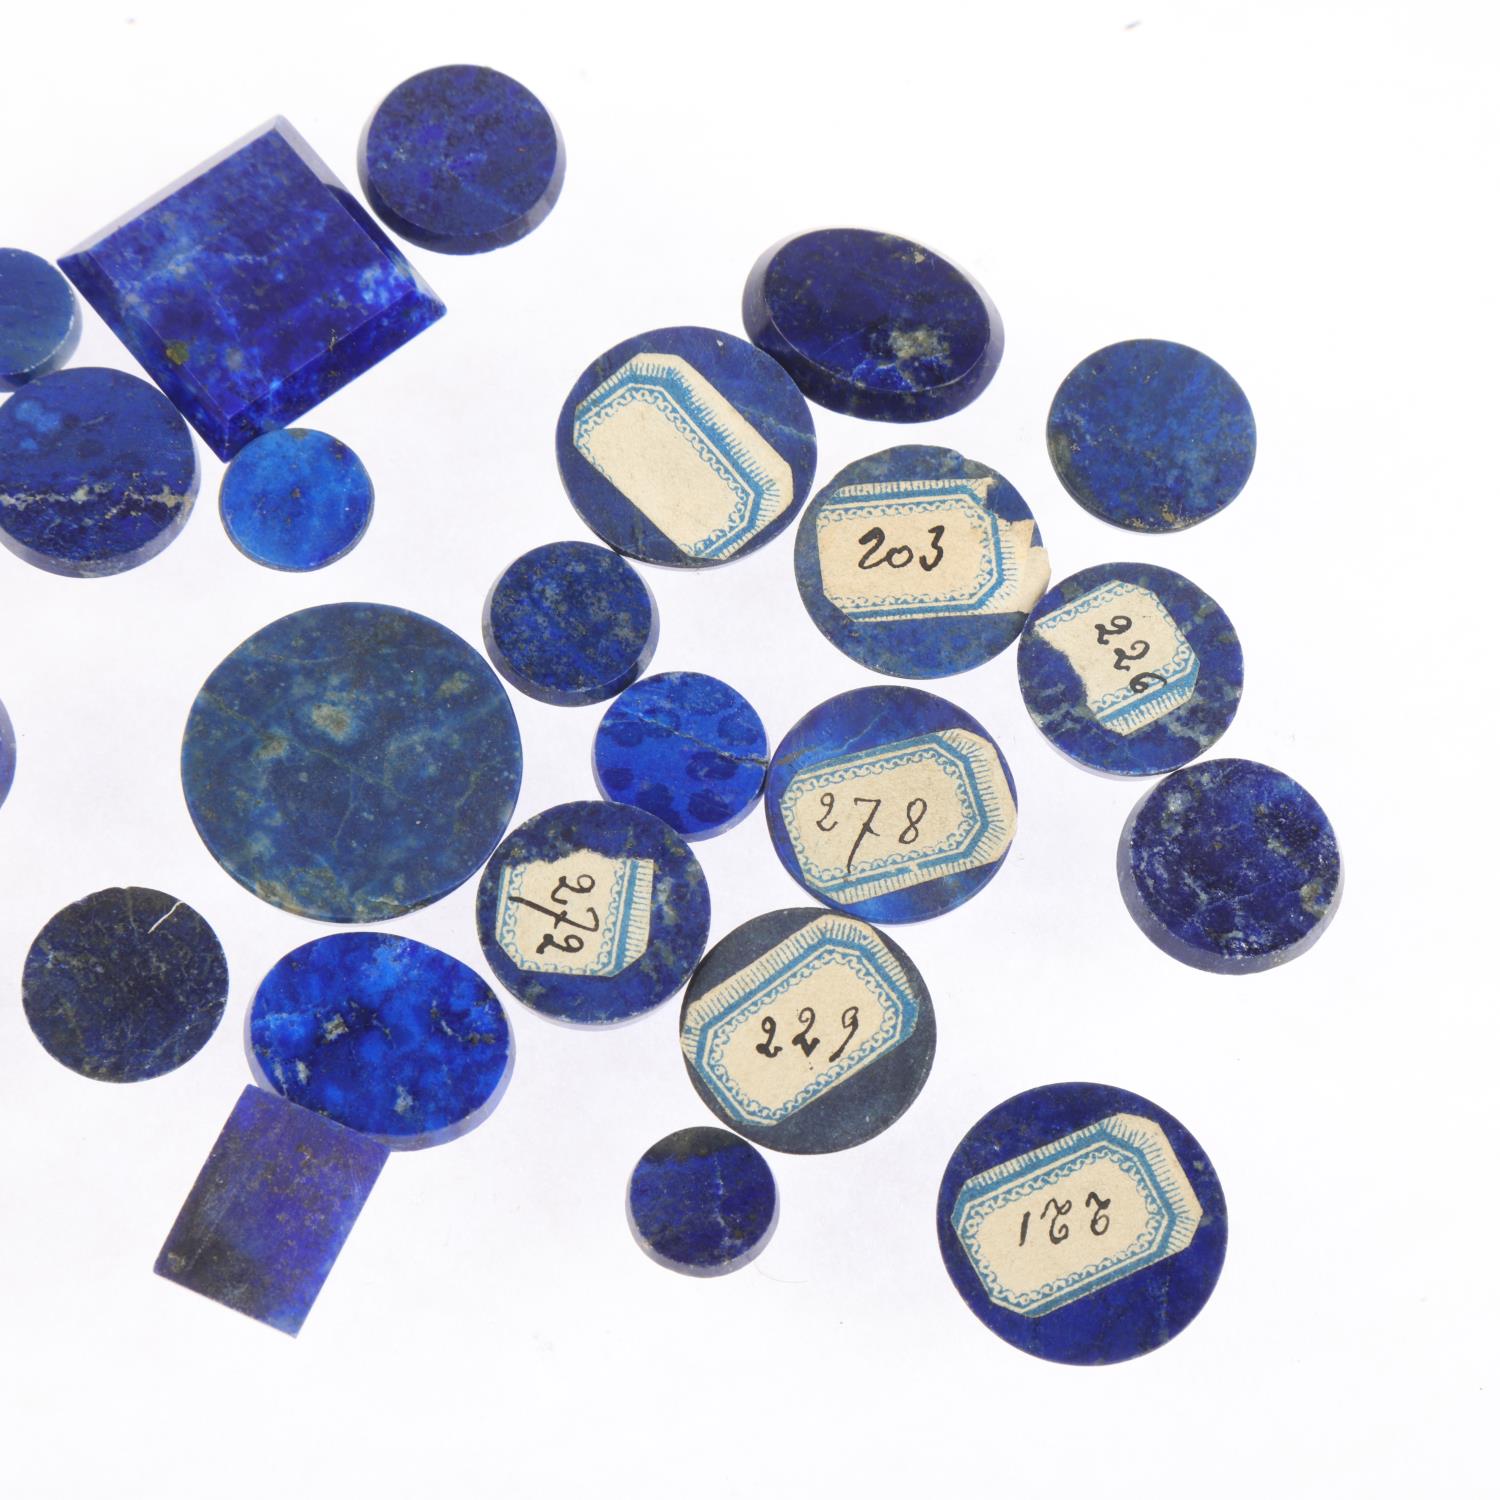 25 various lapis lazuli tablets, largest circle diameter 23.4mm A few have faint hairline cracks, - Image 3 of 4